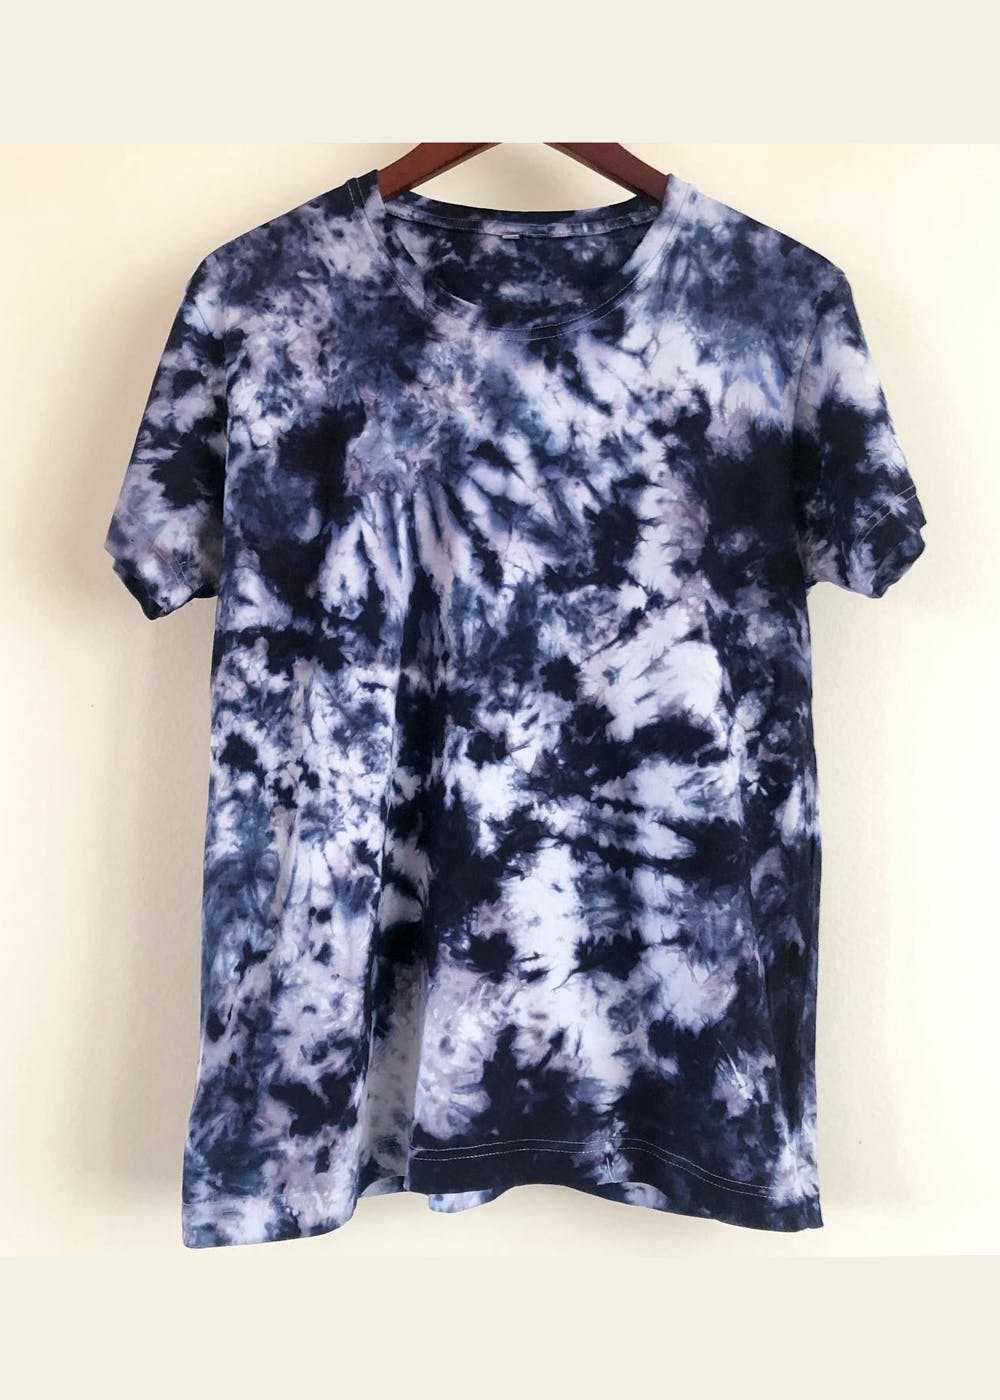 Get Dark Blue Scrunch Tie-Dye T-Shirt at ₹ 420 | LBB Shop